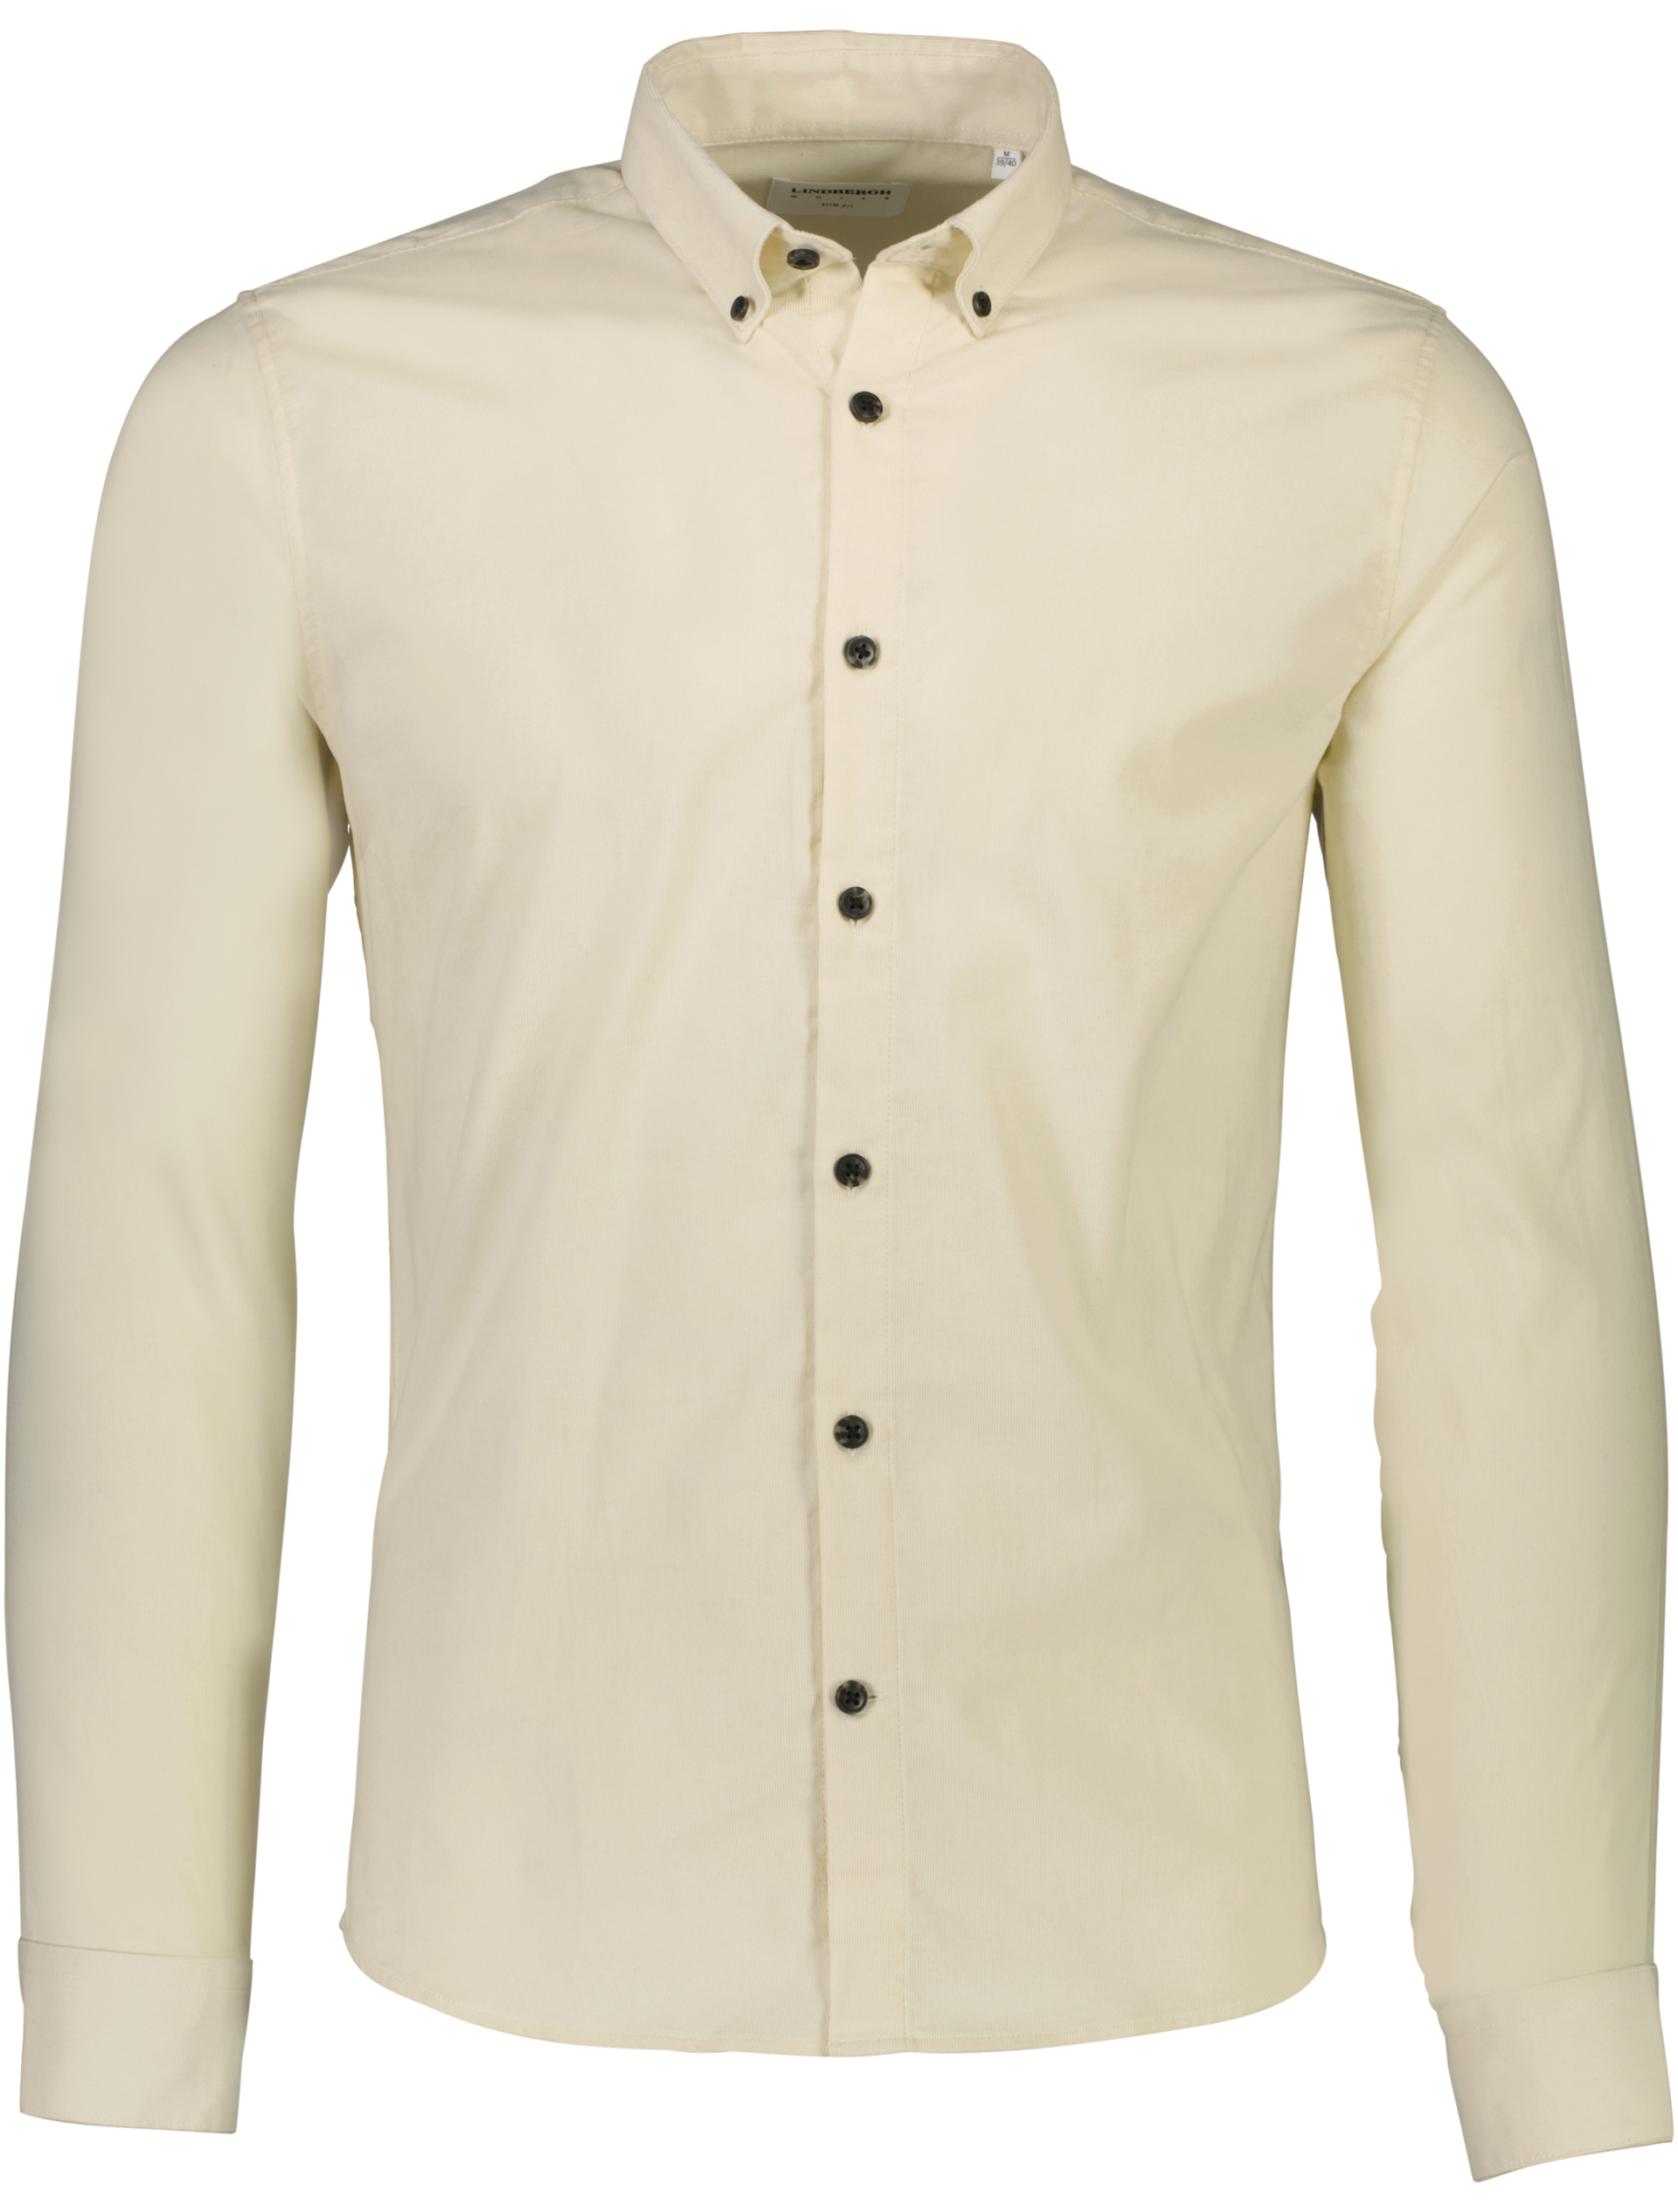 Lindbergh Corduroy shirt white / cream white